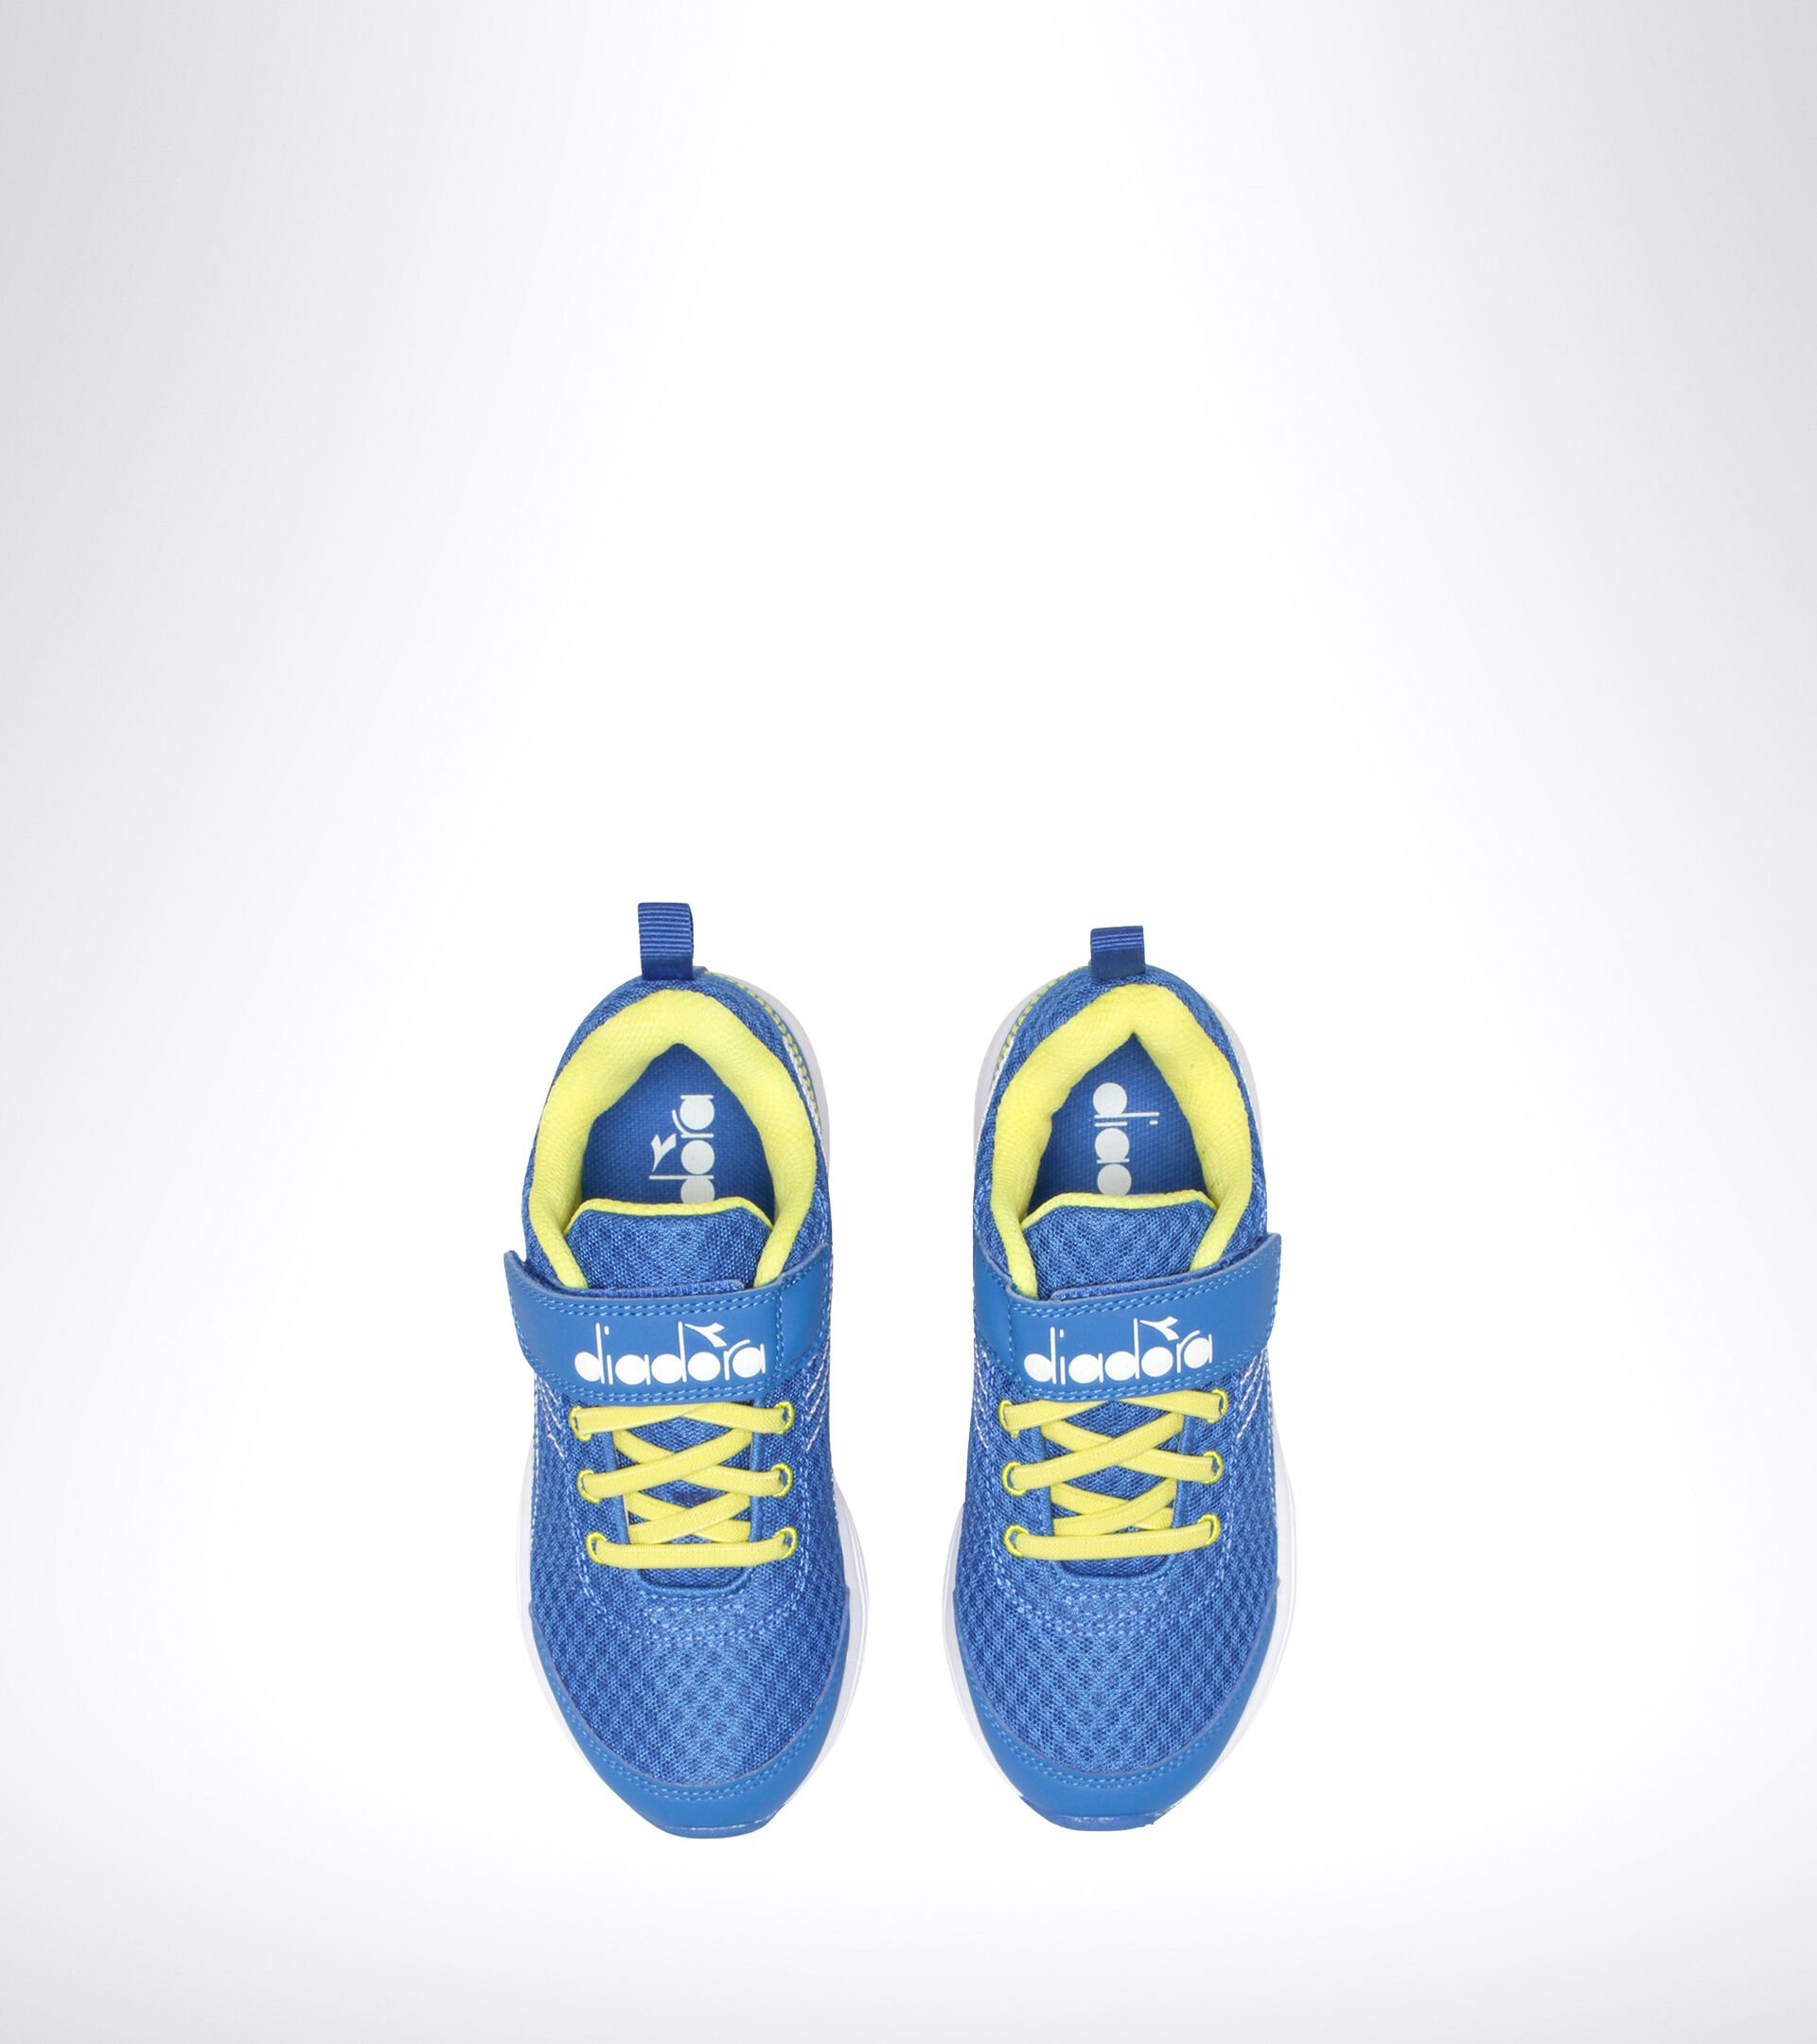 Chaussures de running - Unisexe enfant FLAMINGO 6 JR BLEU CLAIR/BLANC - Diadora